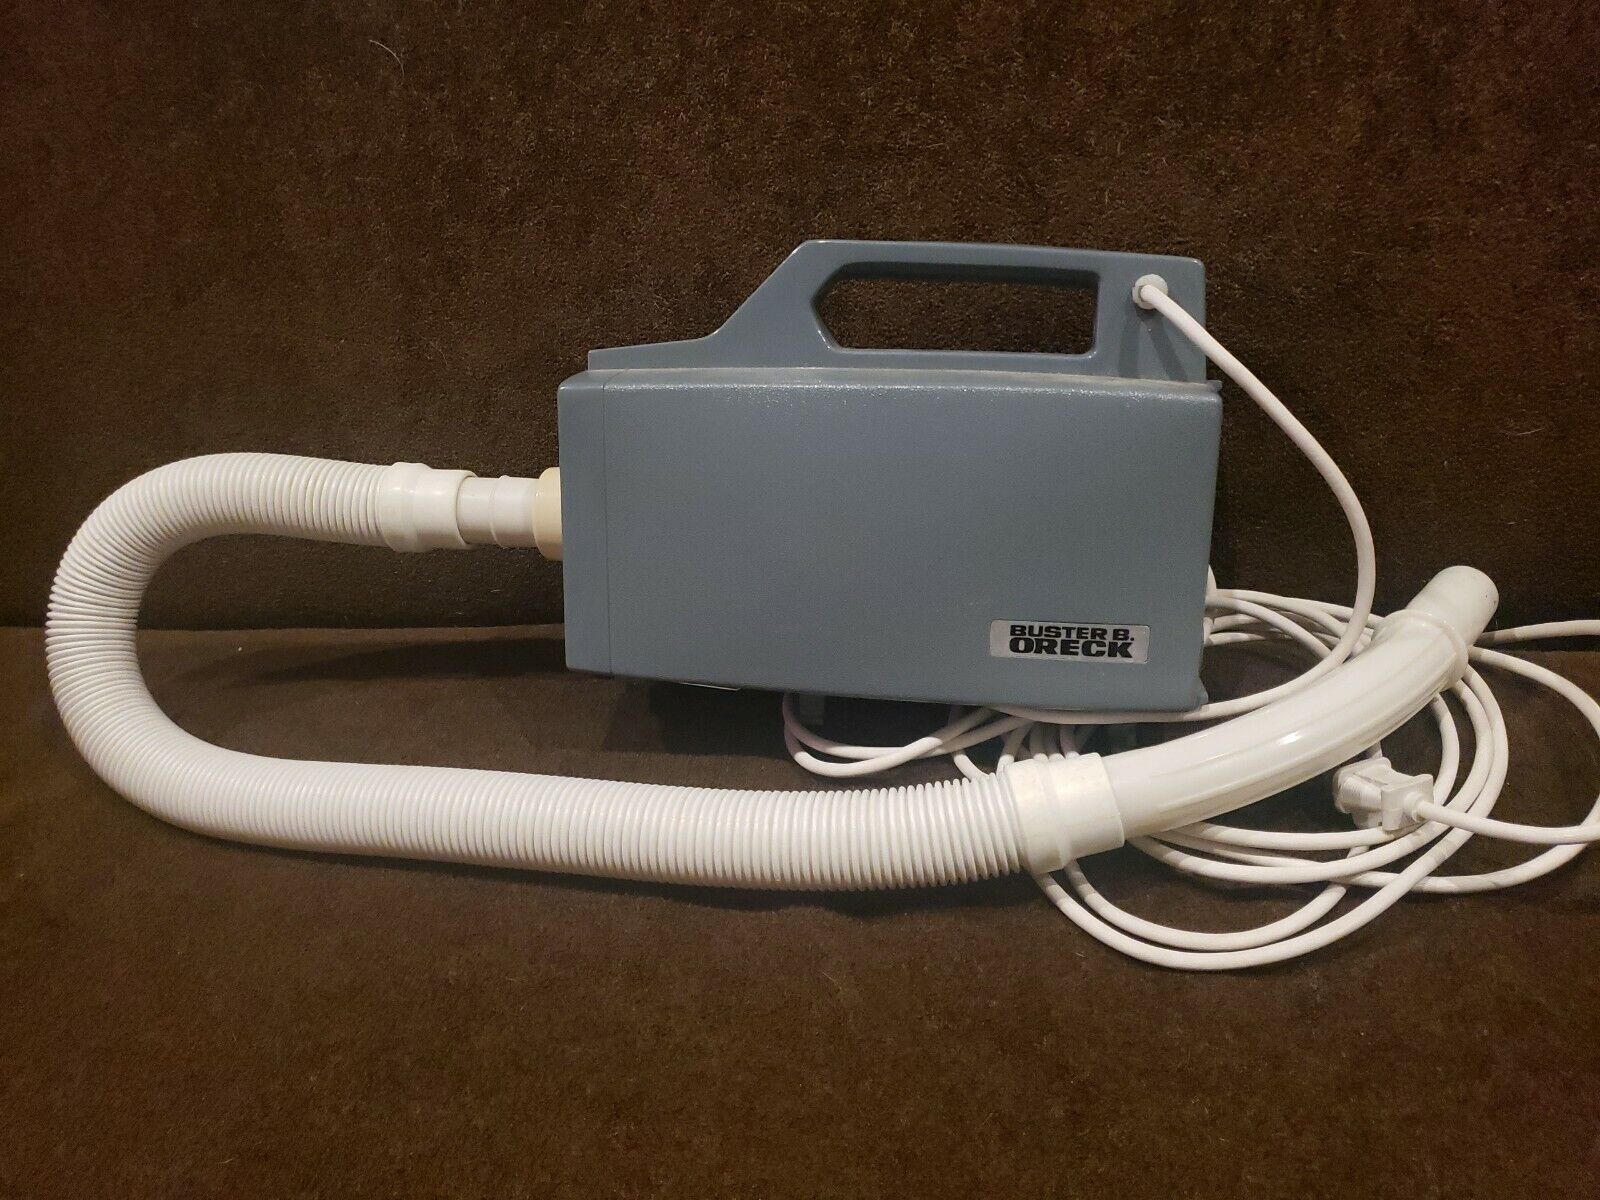 Vintage Buster B Oreck BB-180 Handheld Vacuum Cleaner Grey corded accessories 